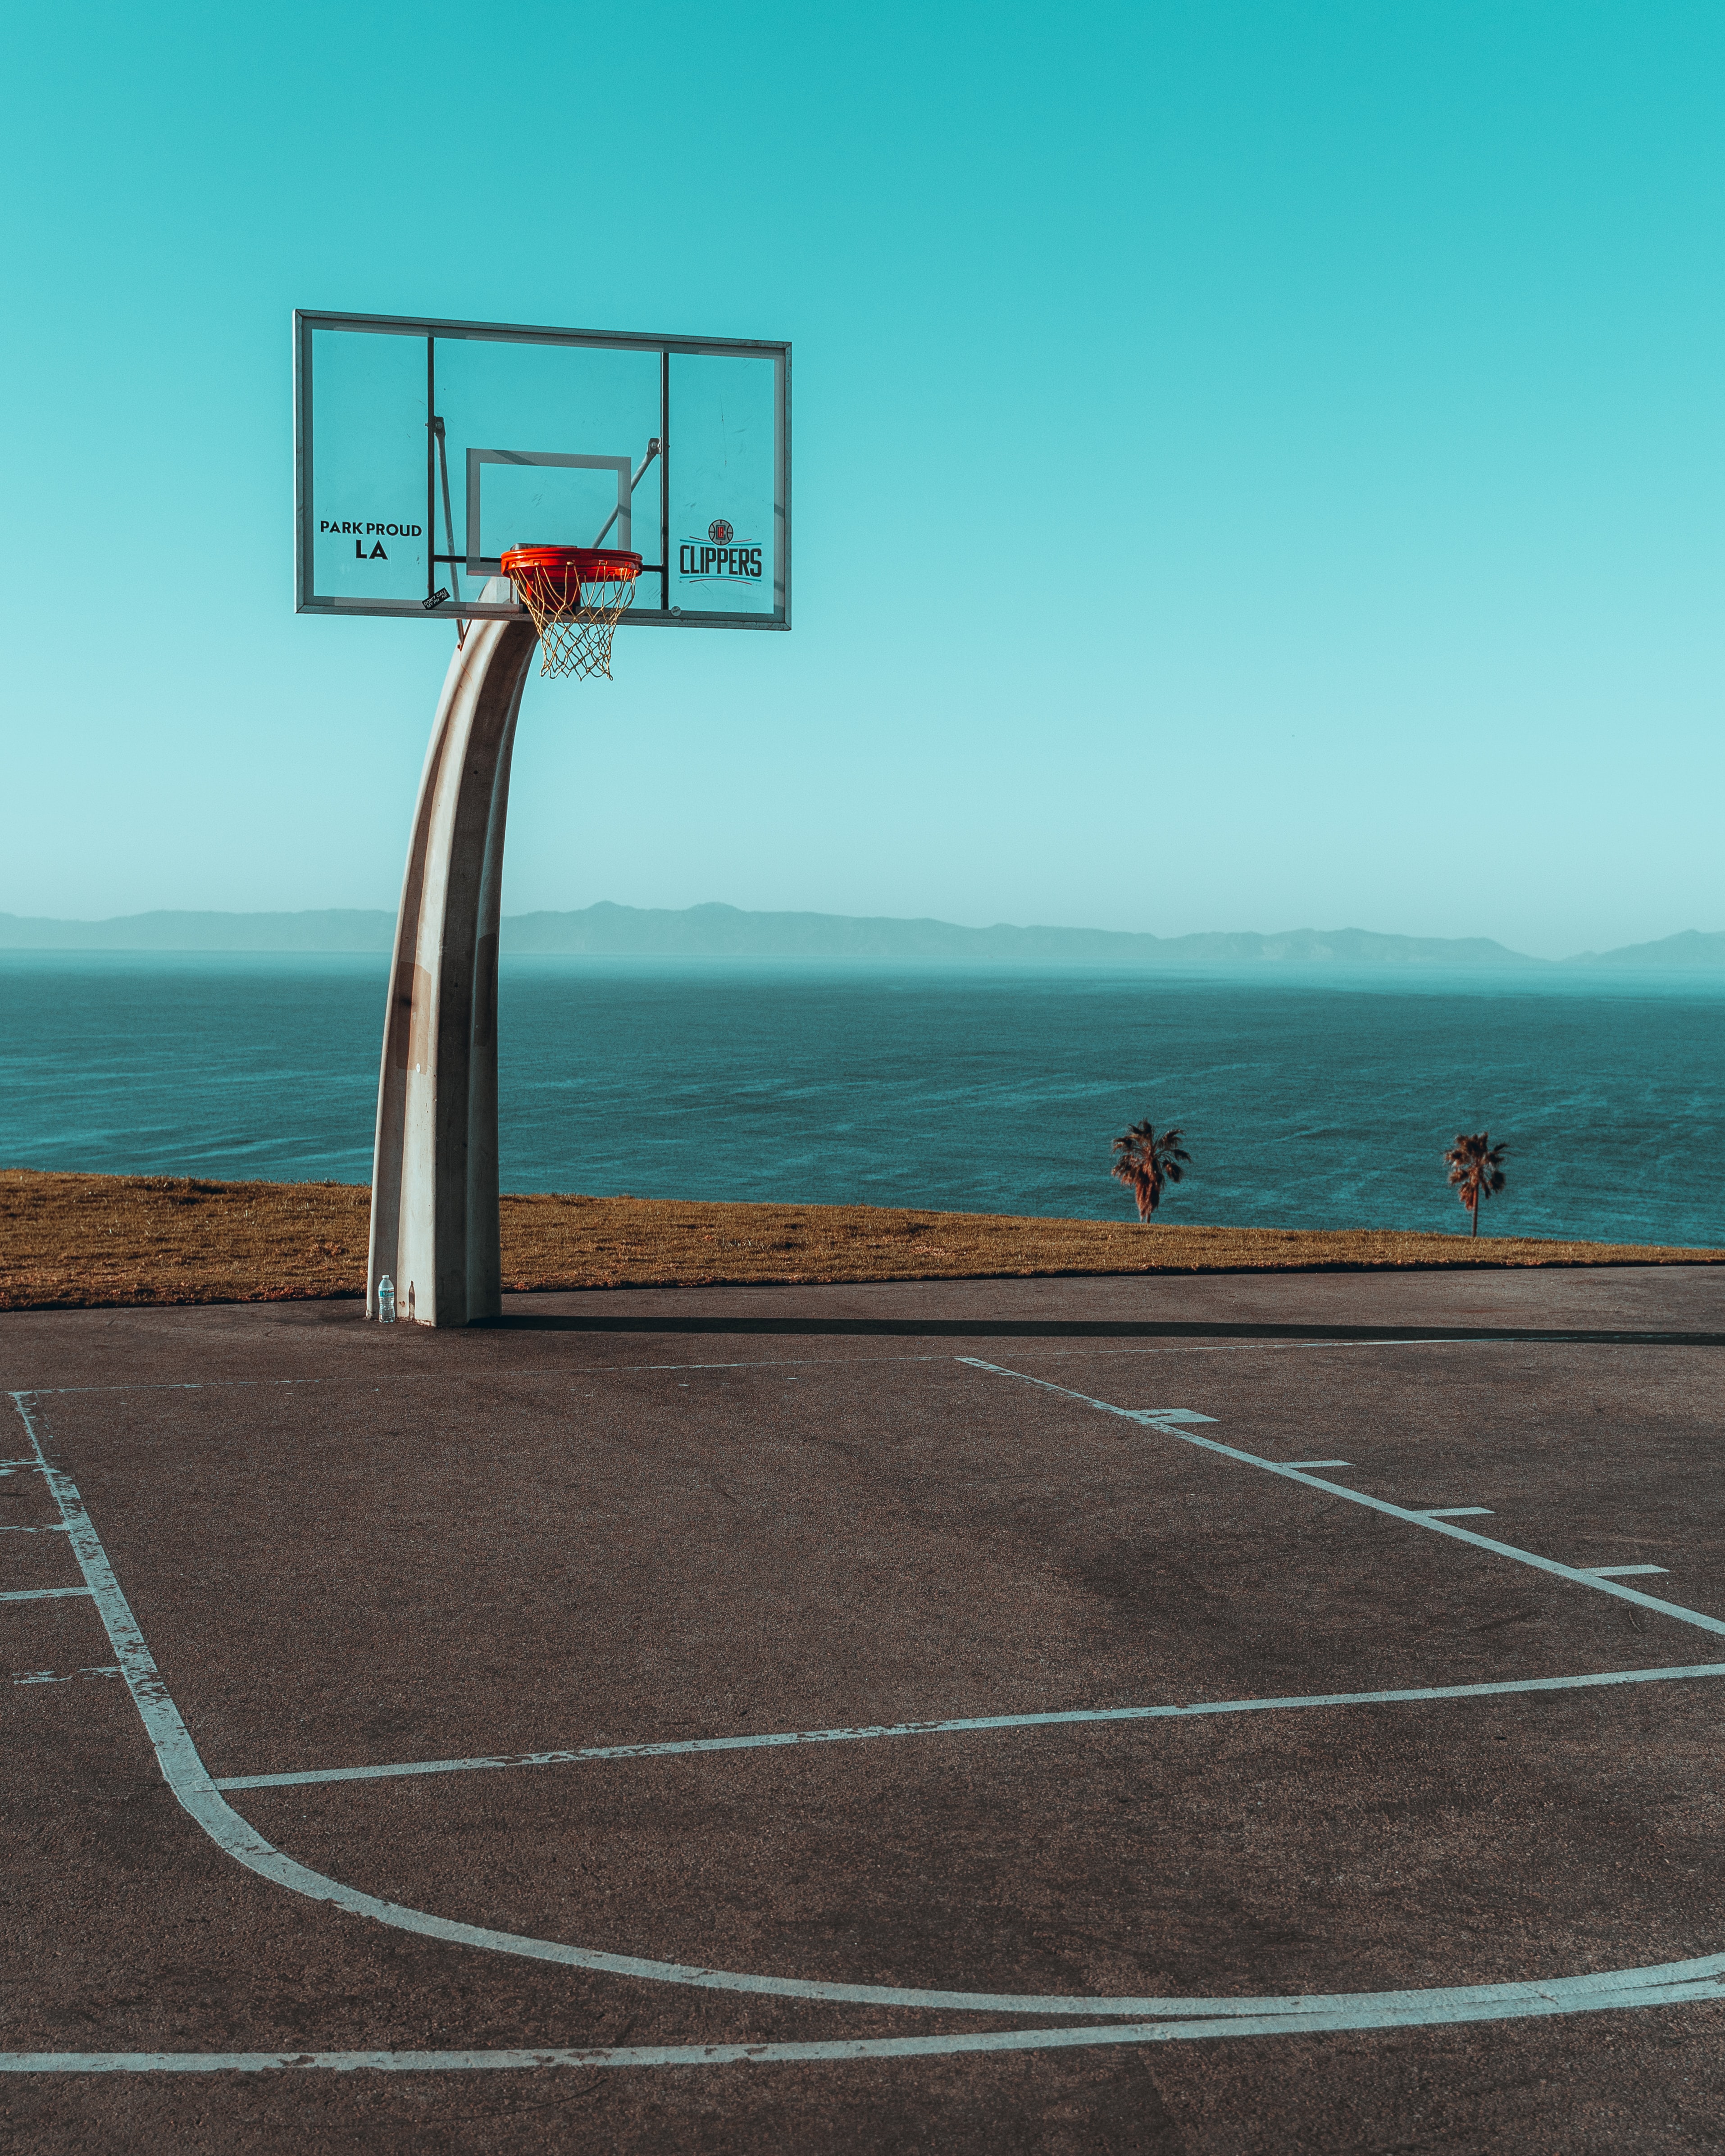 Cool Backgrounds markup, platform, basketball ring, basketball hoop Covering